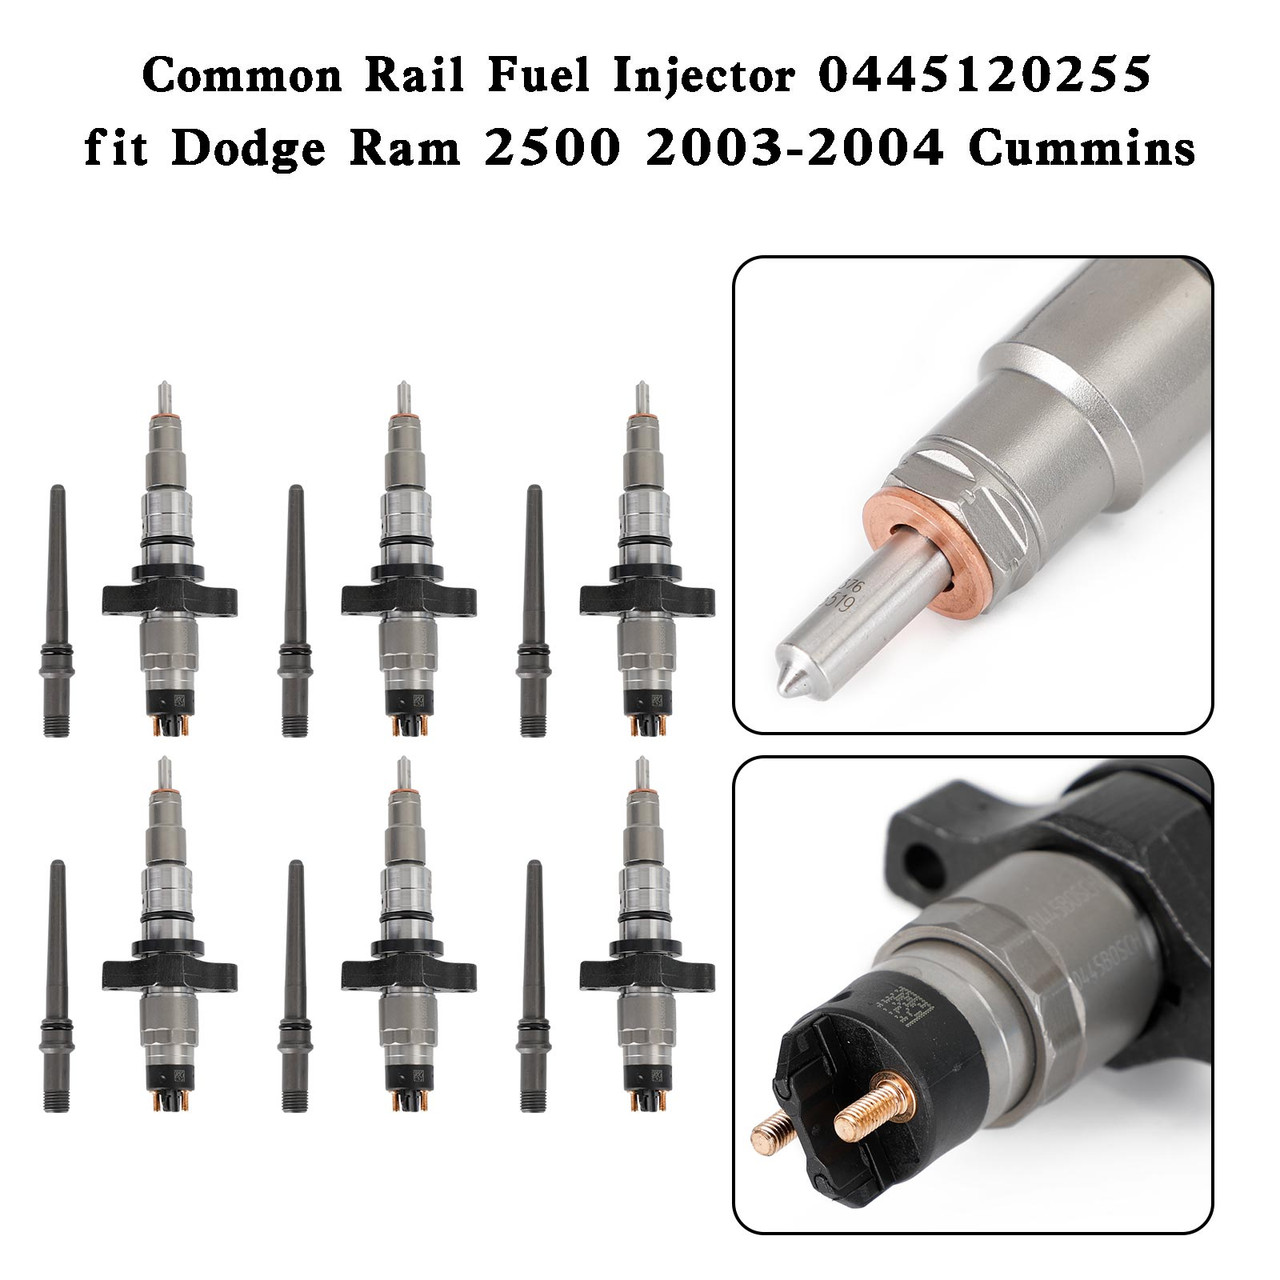 6PCS Common Rail Fuel Injector 0445120255 fit Dodge Ram 2500 2003-2004 Cummins